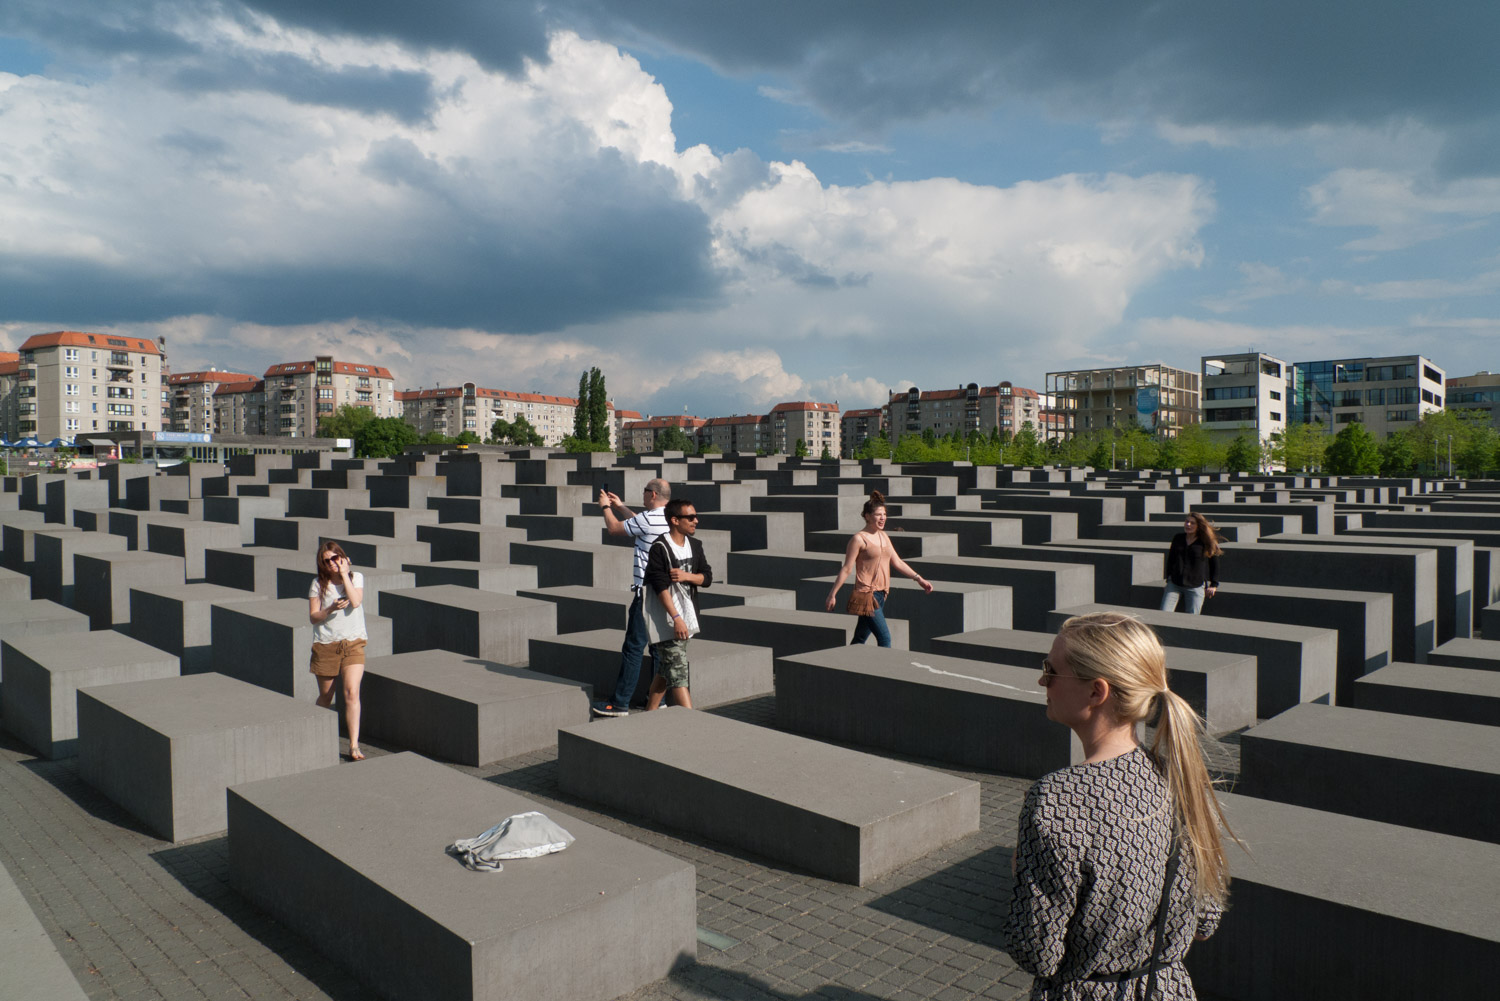 19. Holocaust Monument